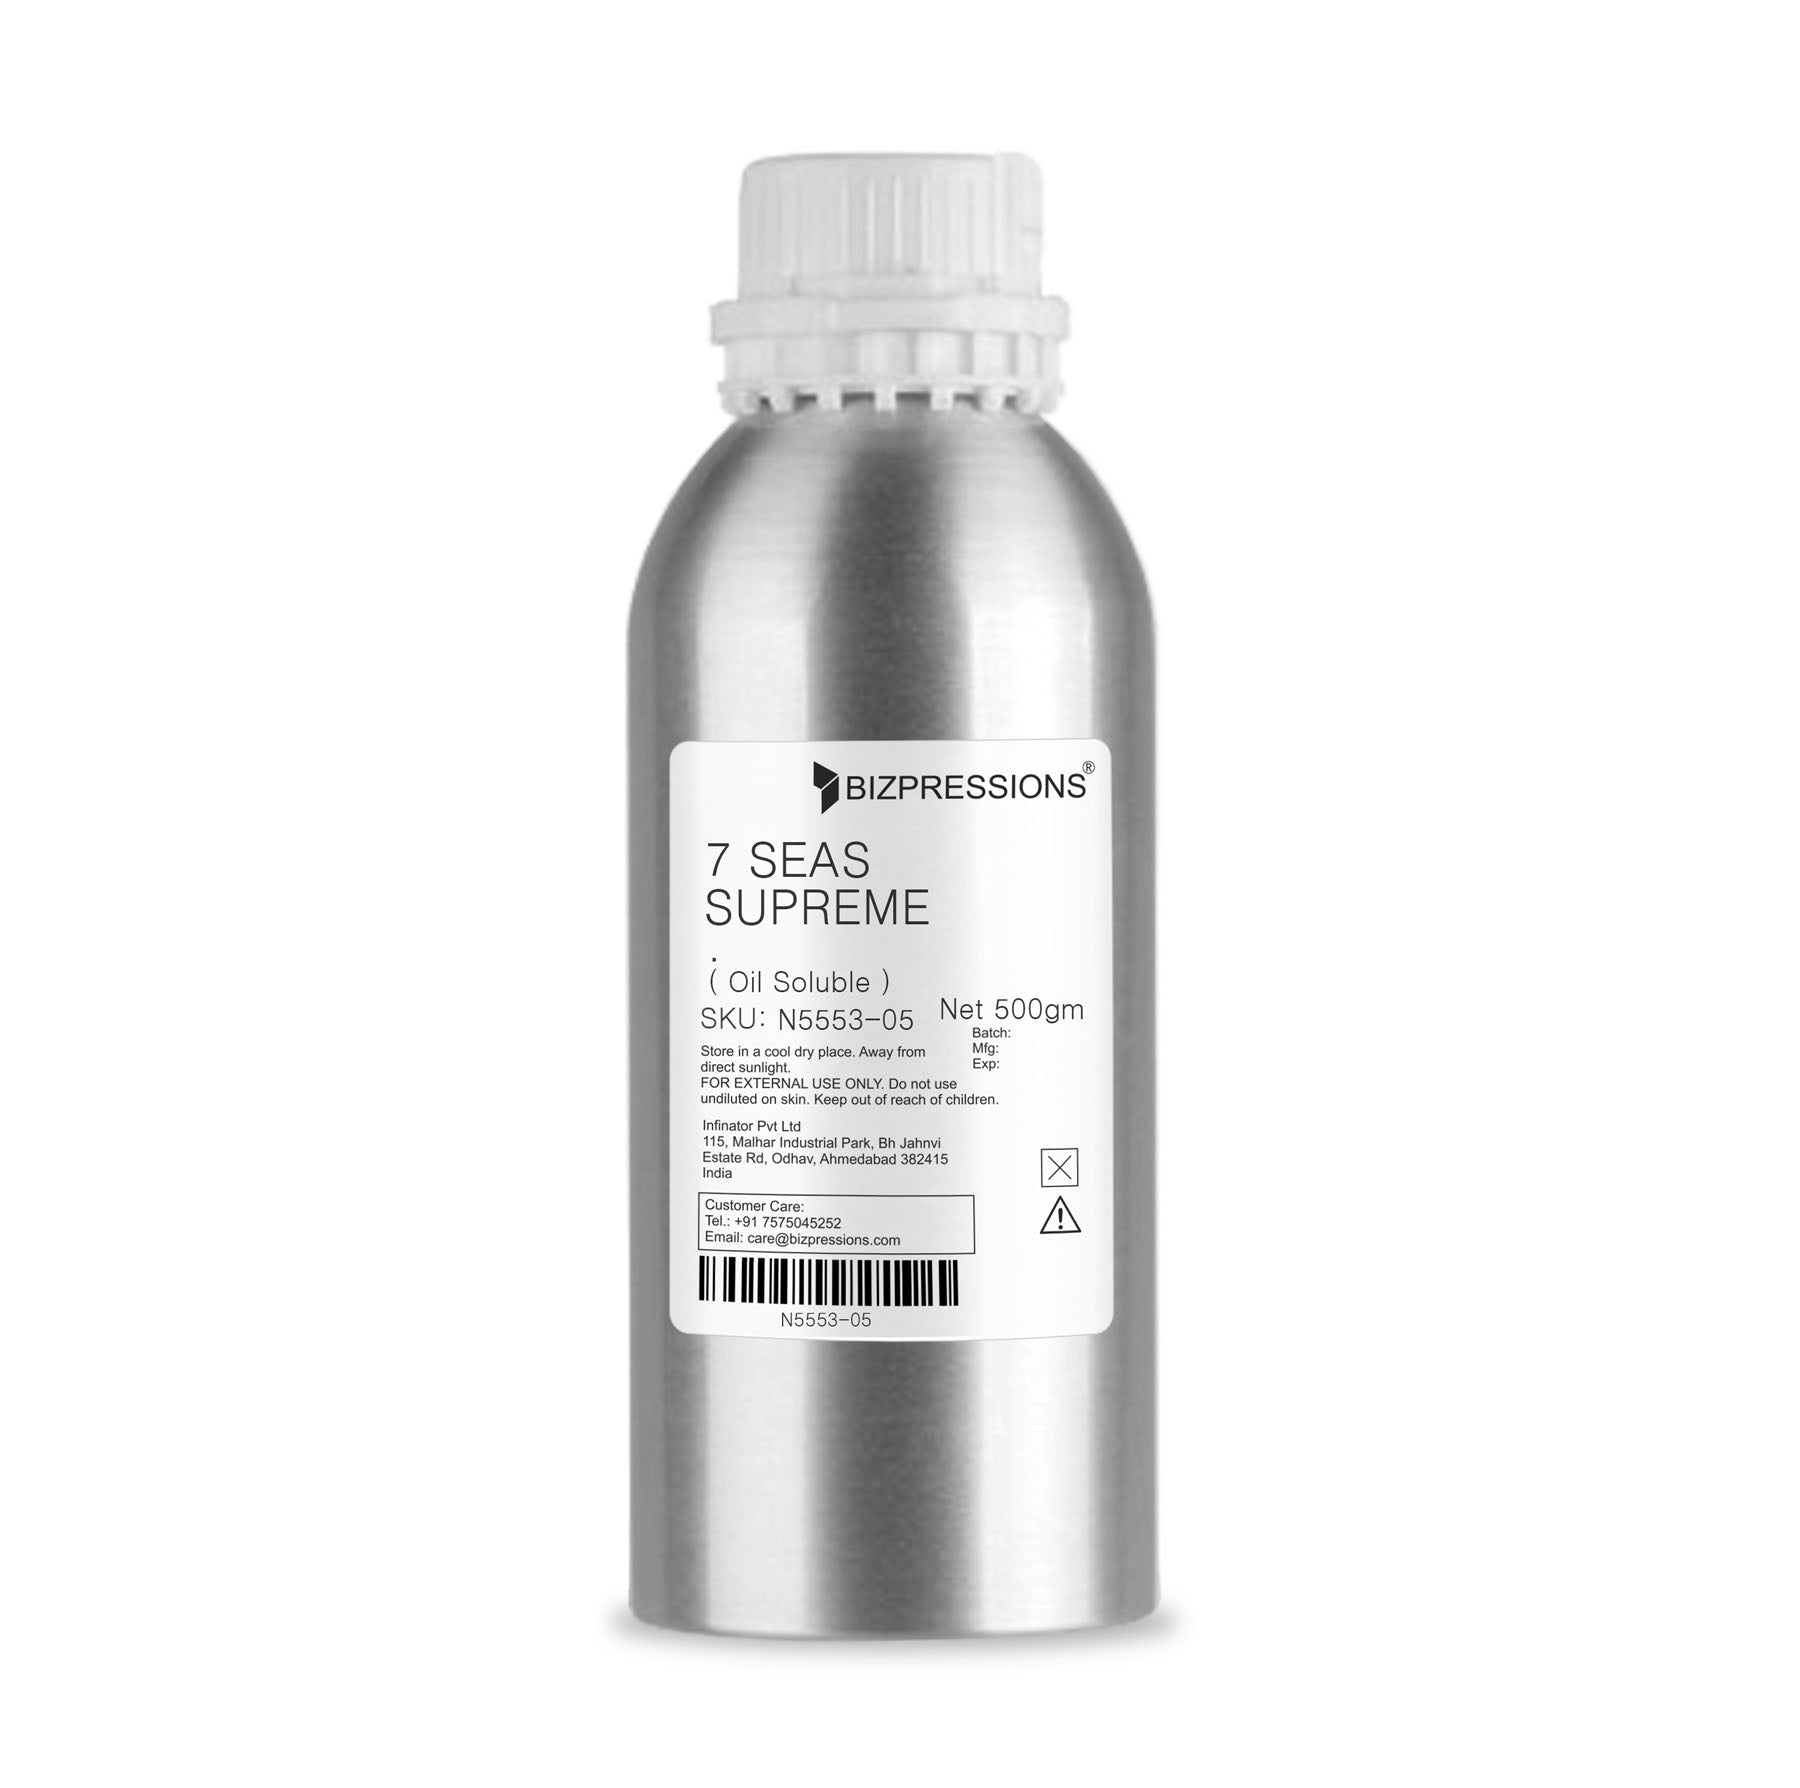 7 SEAS SUPREME - Fragrance ( Oil Soluble ) - 500 gm